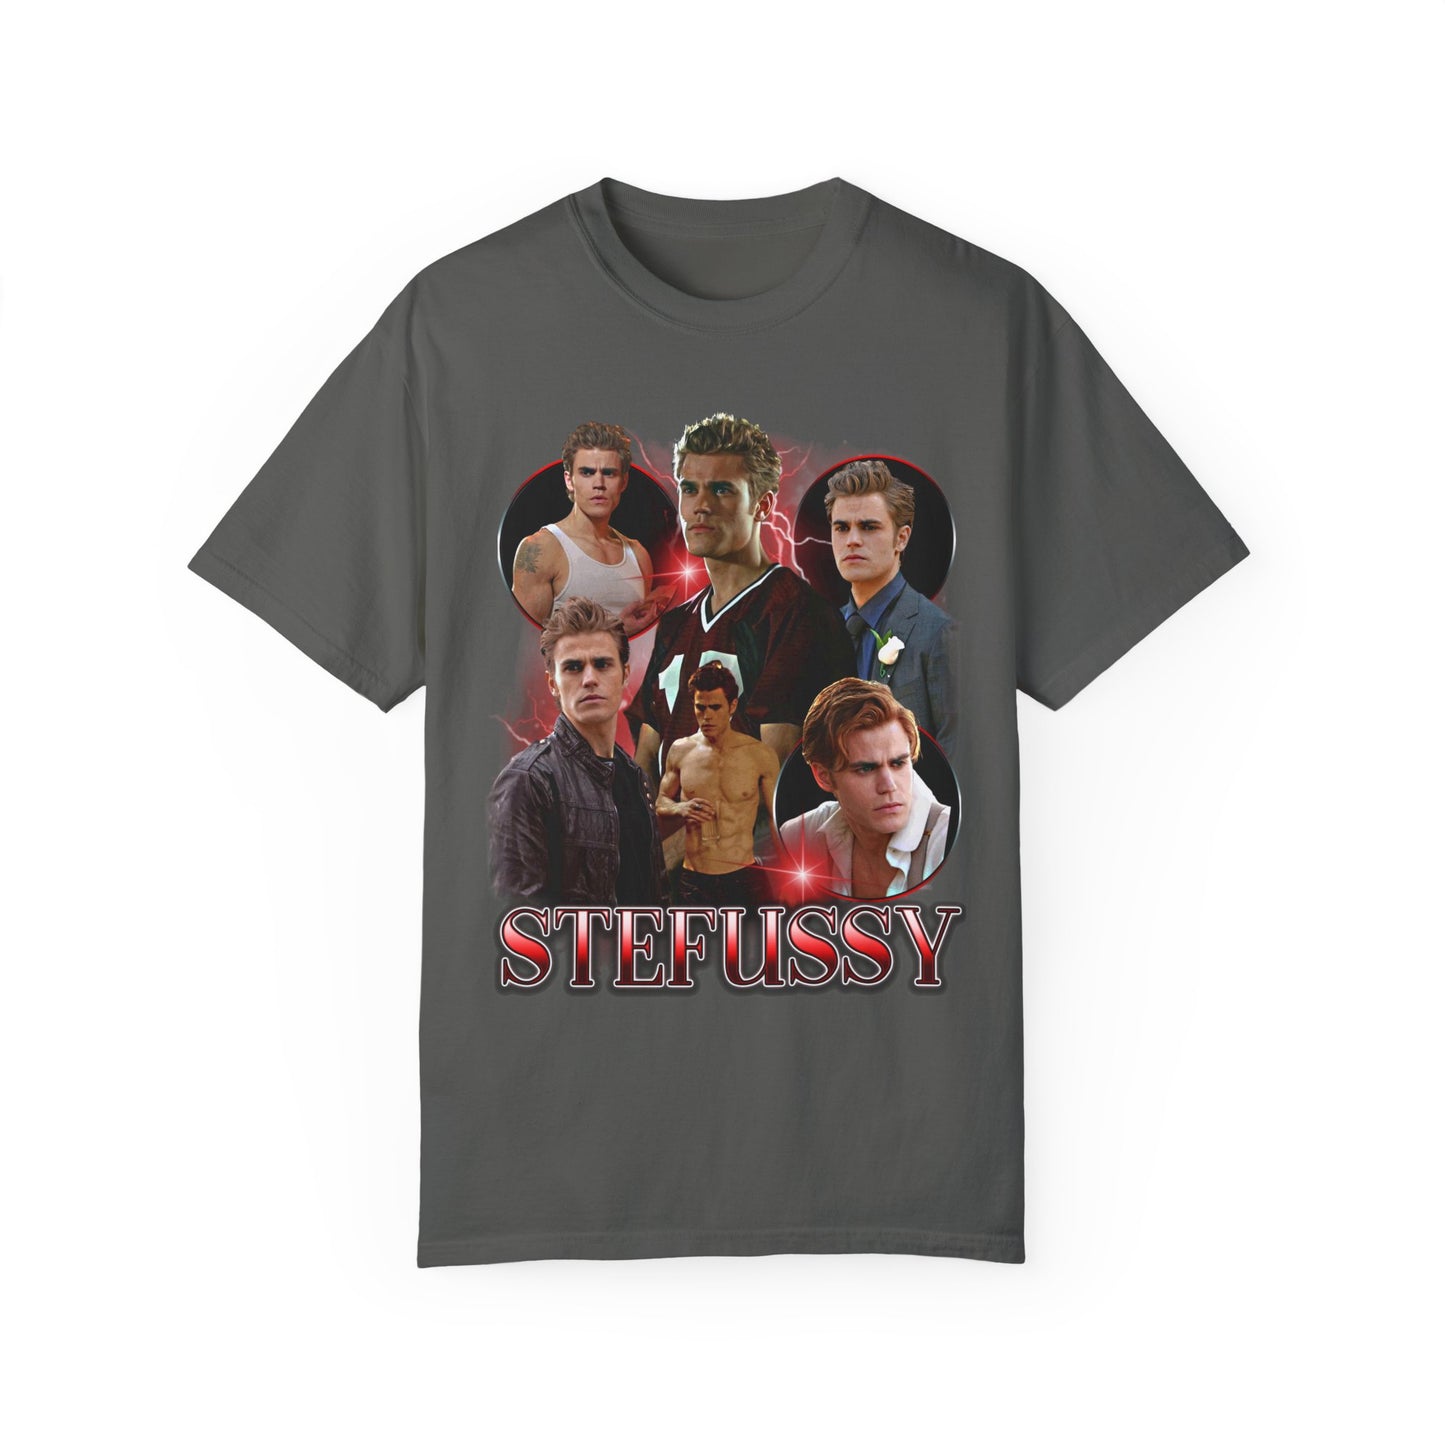 Stefussy shirt